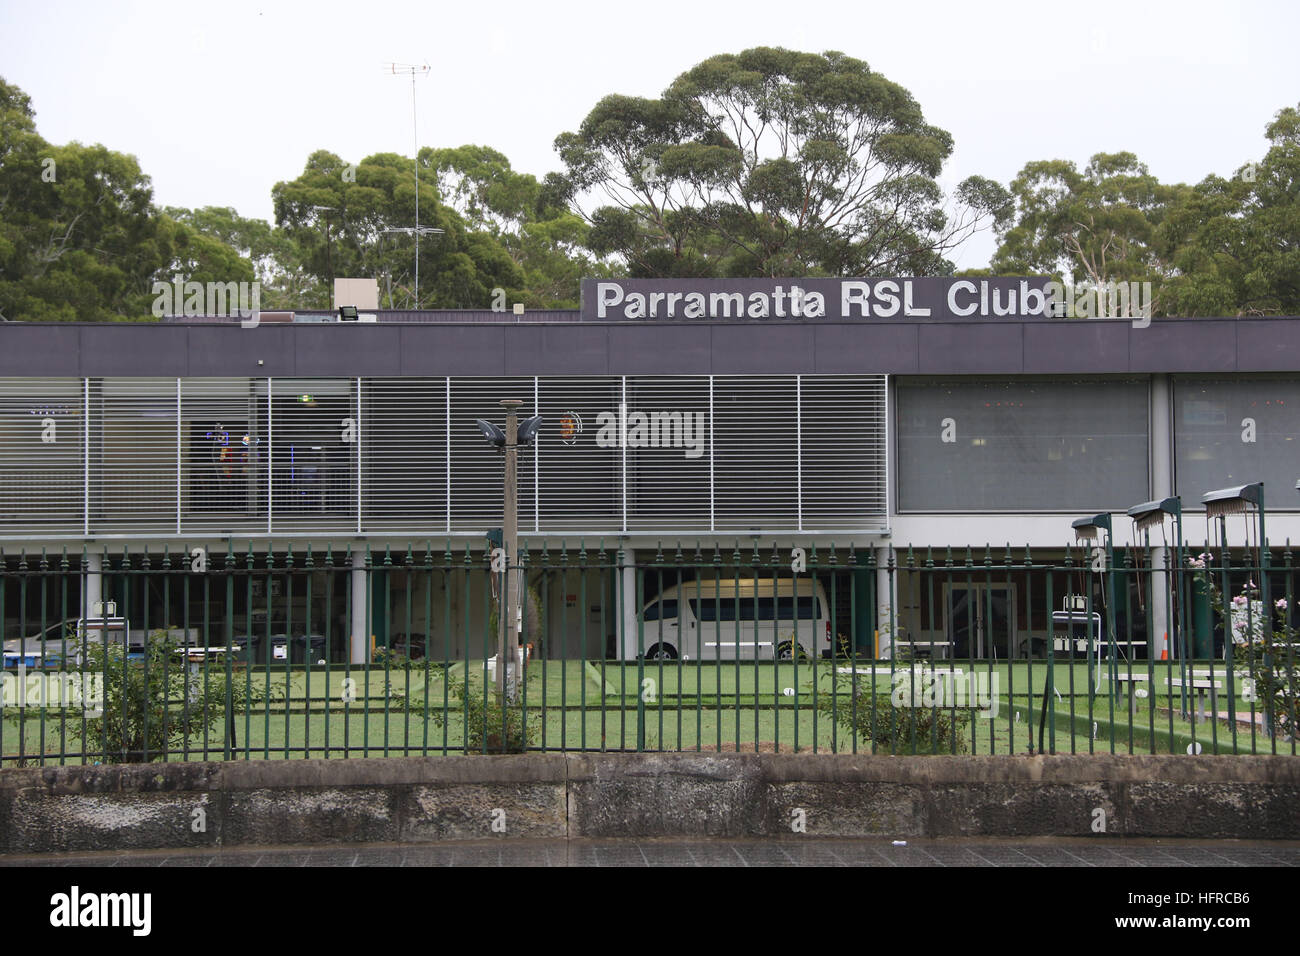 Parramatta RSL Club in Western Sydney, Australia. Stock Photo